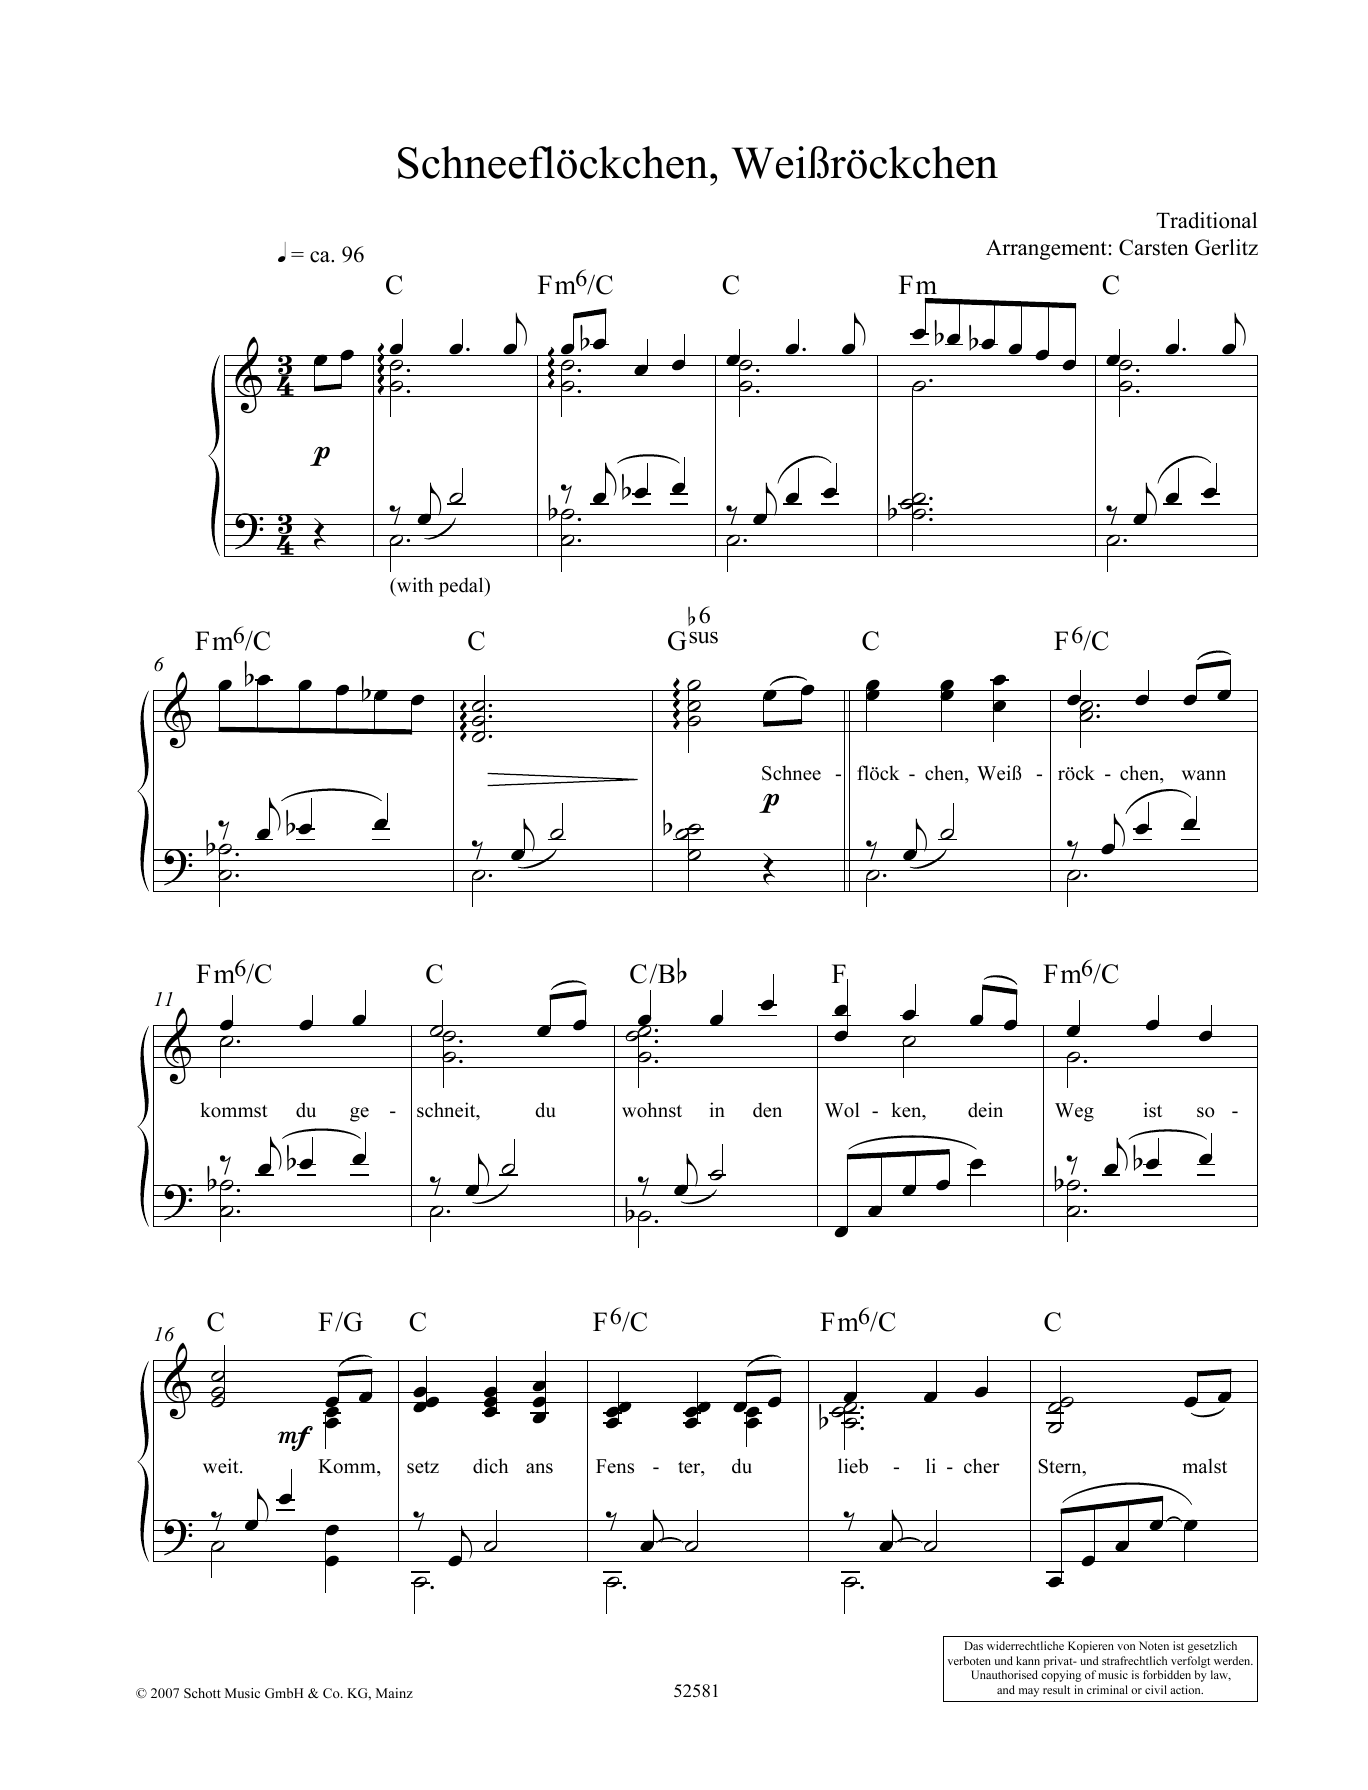 Download Carsten Gerlitz Schneeflöckchen, Weißröckchen Sheet Music and learn how to play Piano Solo PDF digital score in minutes